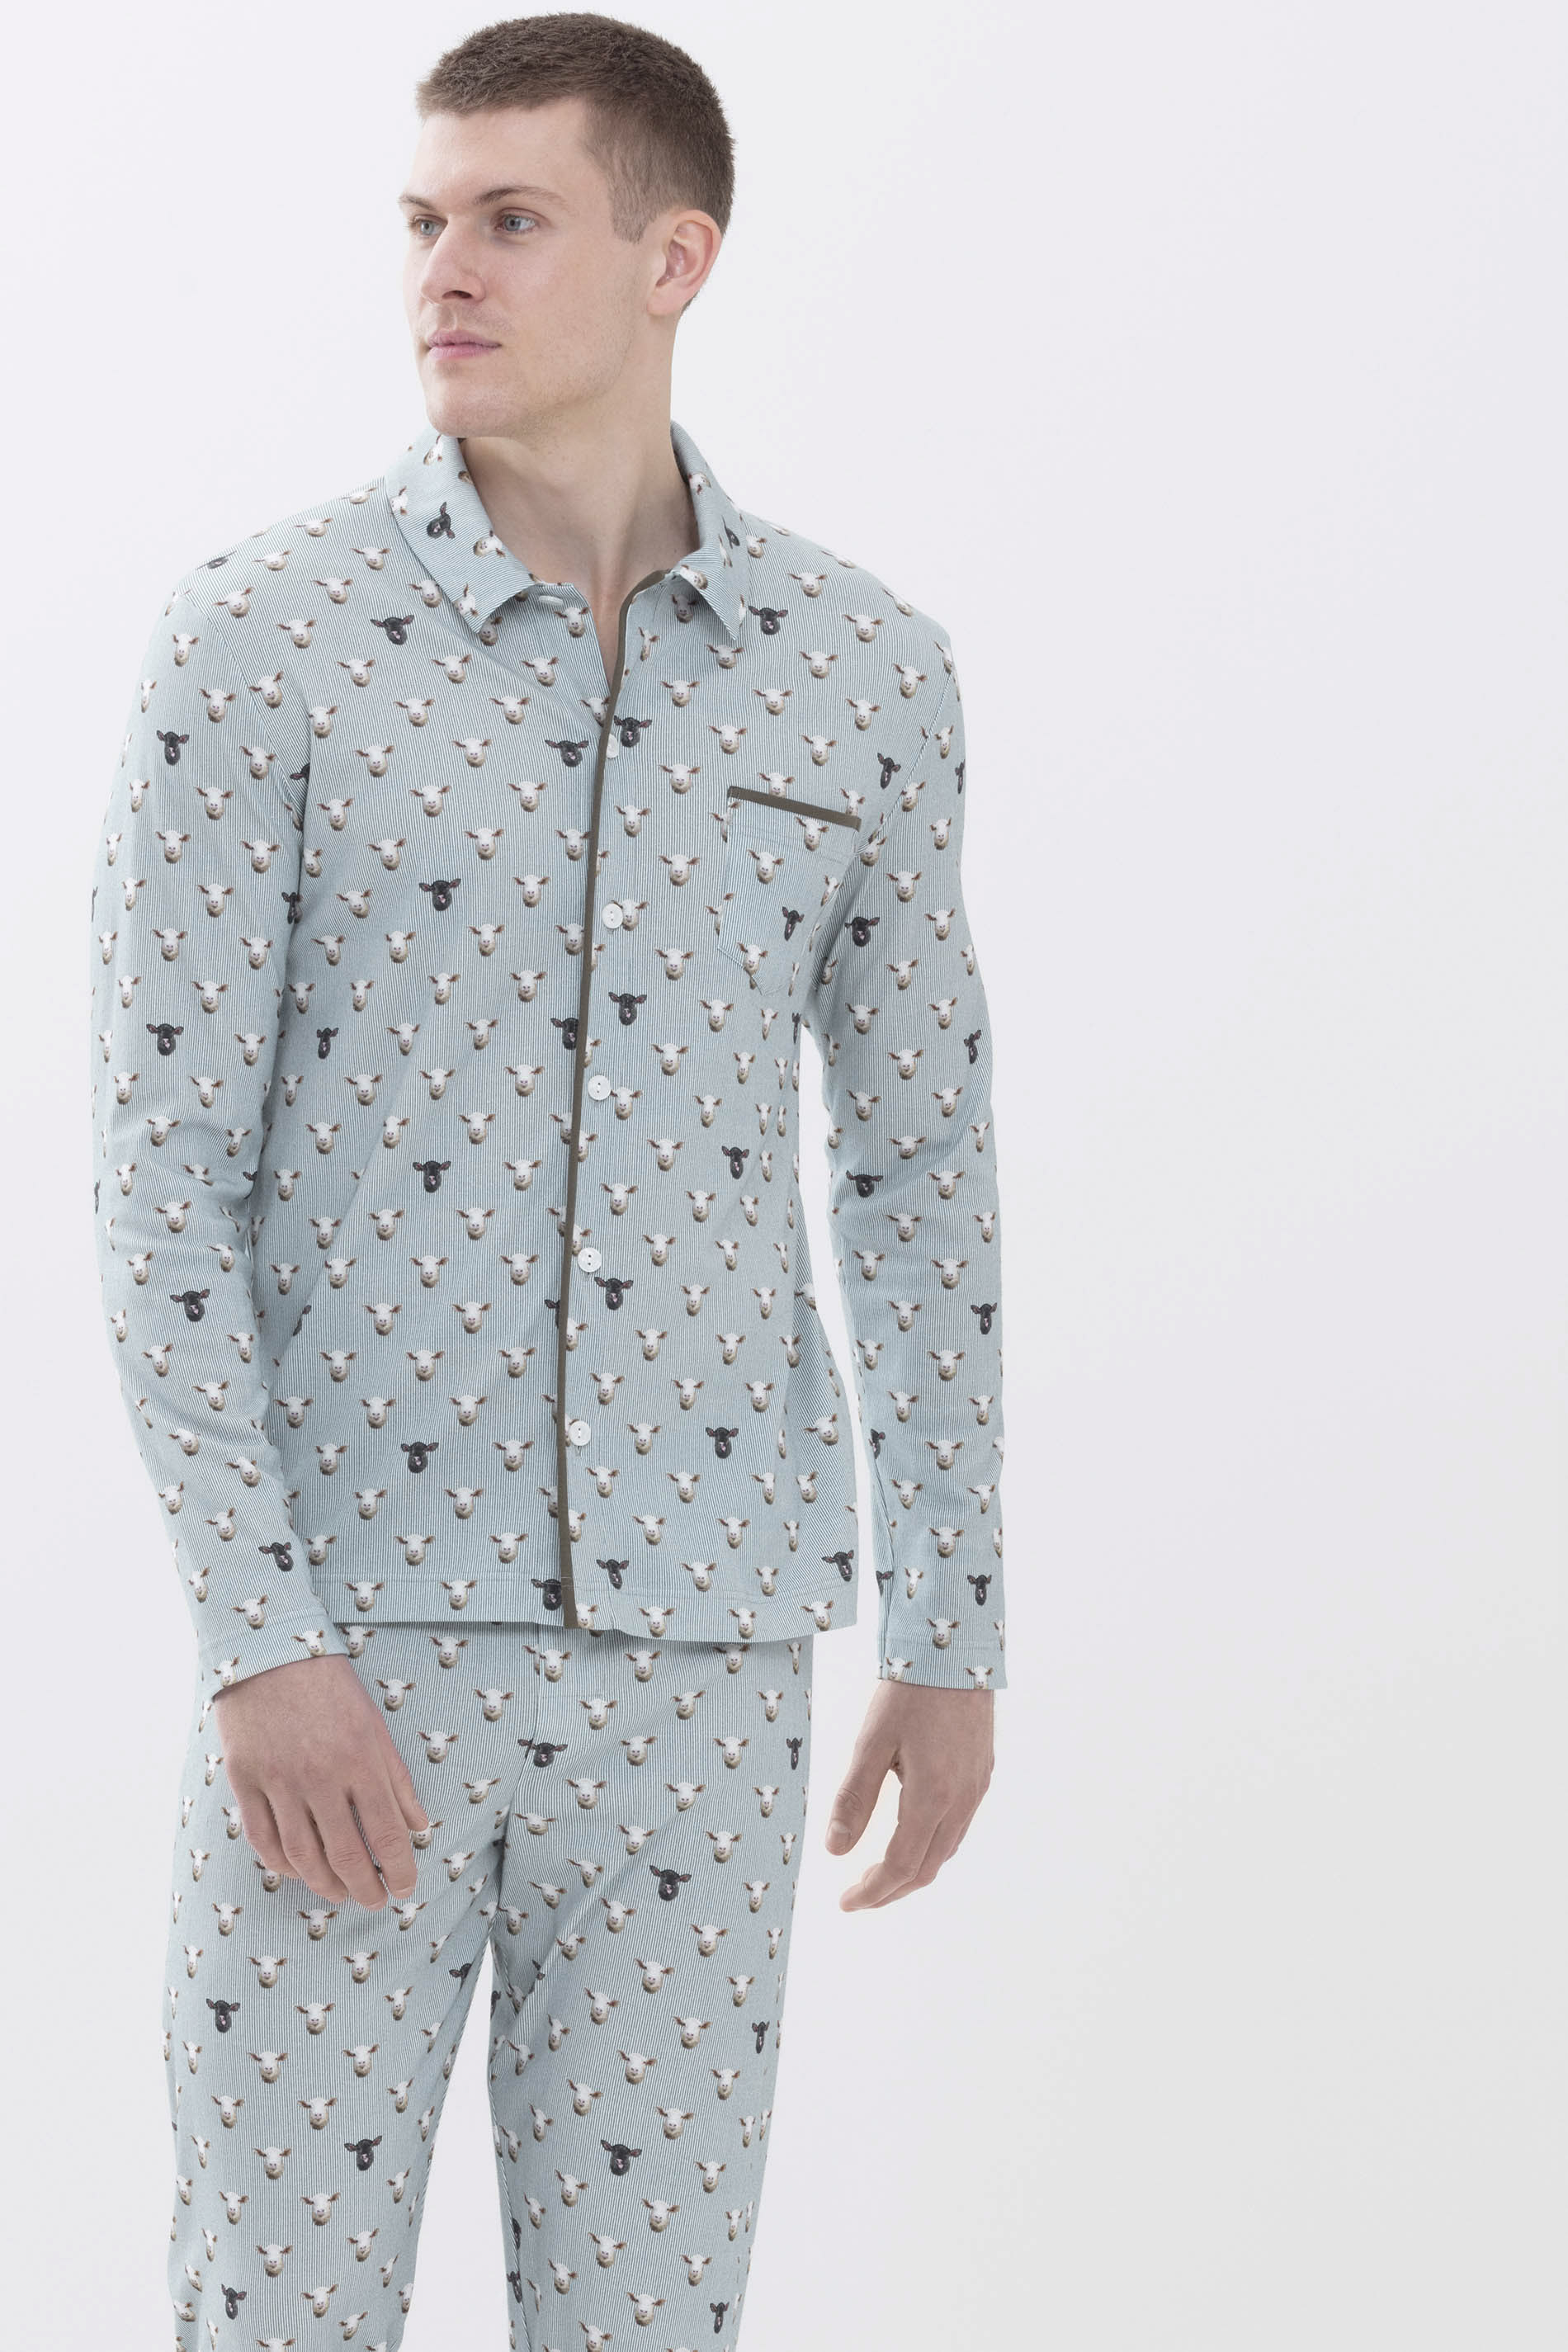 Pyjama shirt Yale Blue Serie RE:THINK BLACK Front View | mey®